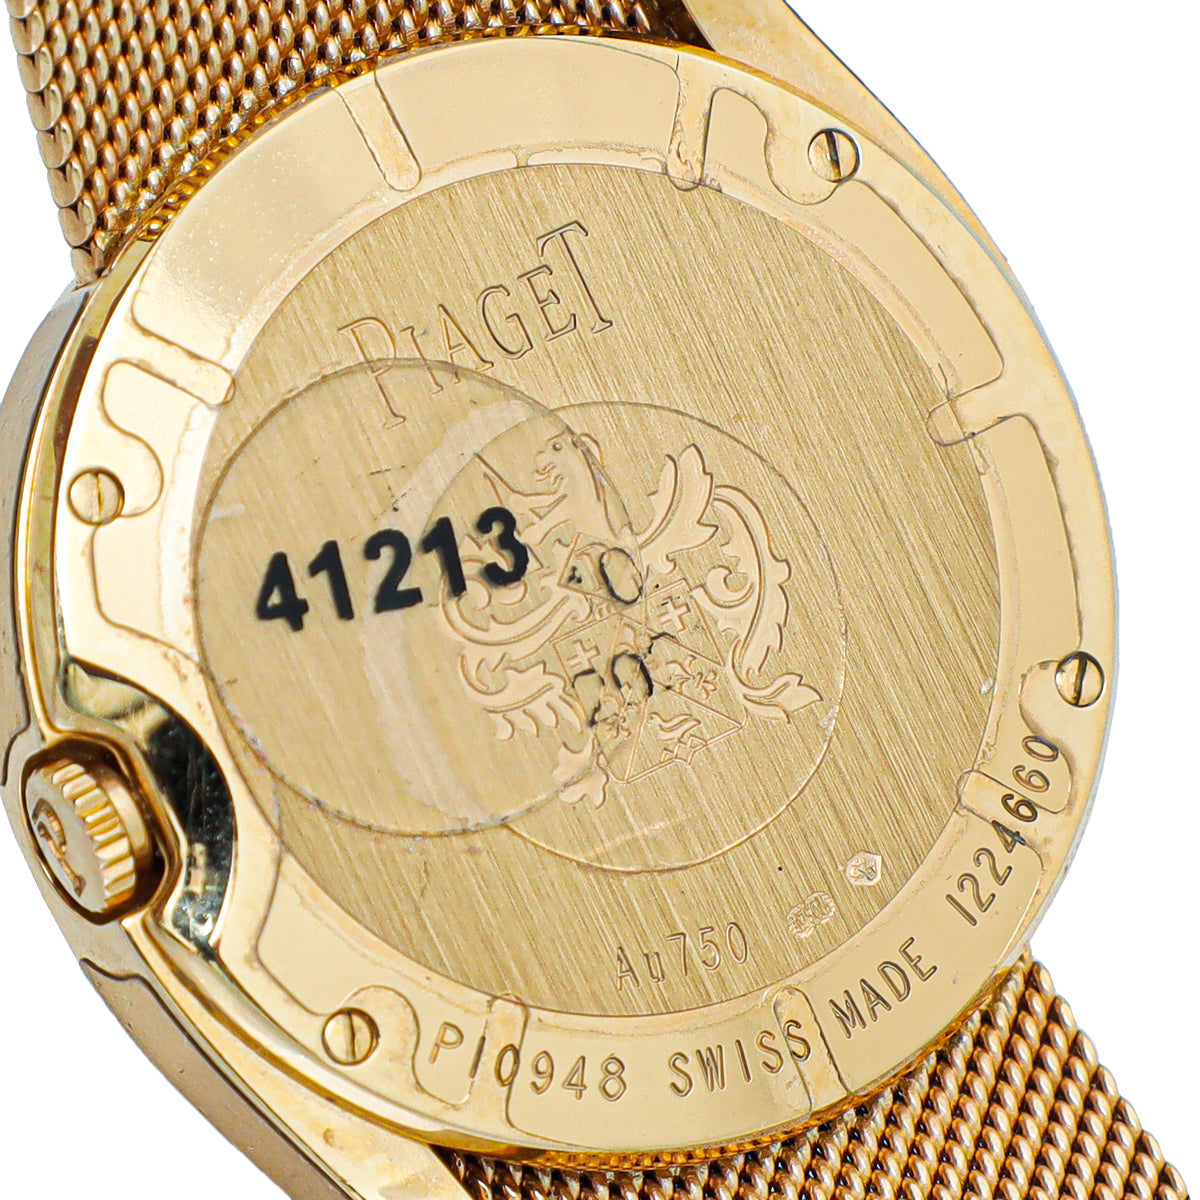 Piaget 18K Rose Gold and Diamond Limelight Gala 32mm Quartz Watch